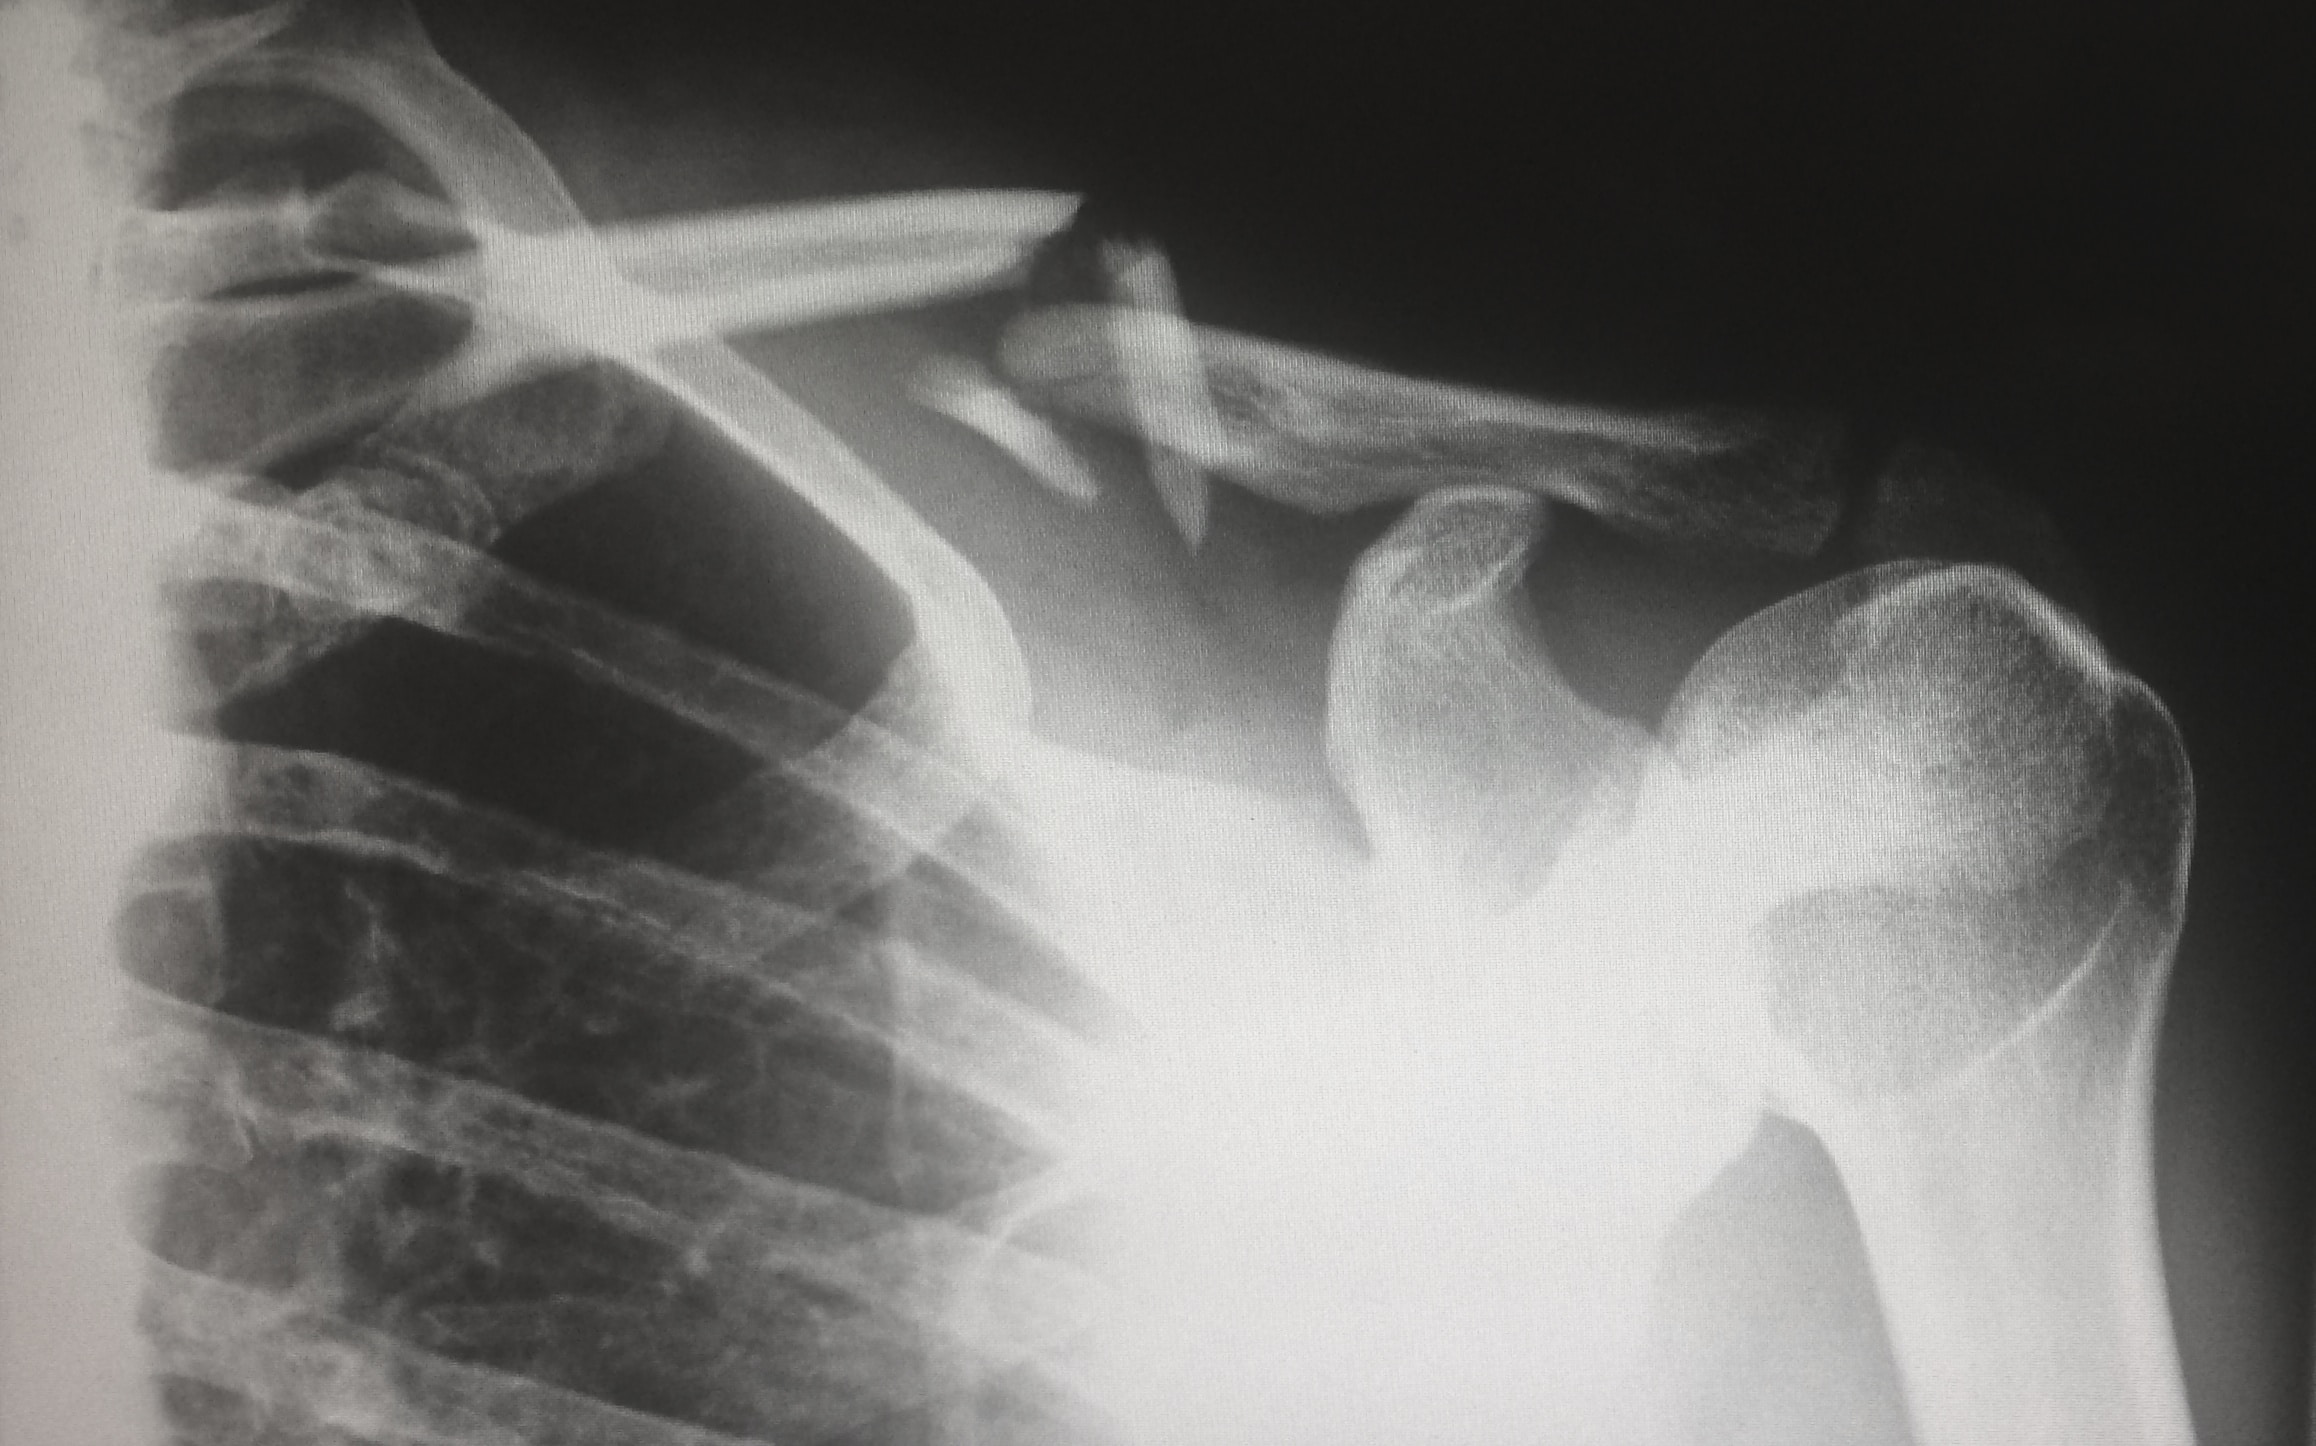 Personal Injury: Broken Collarbone X-ray